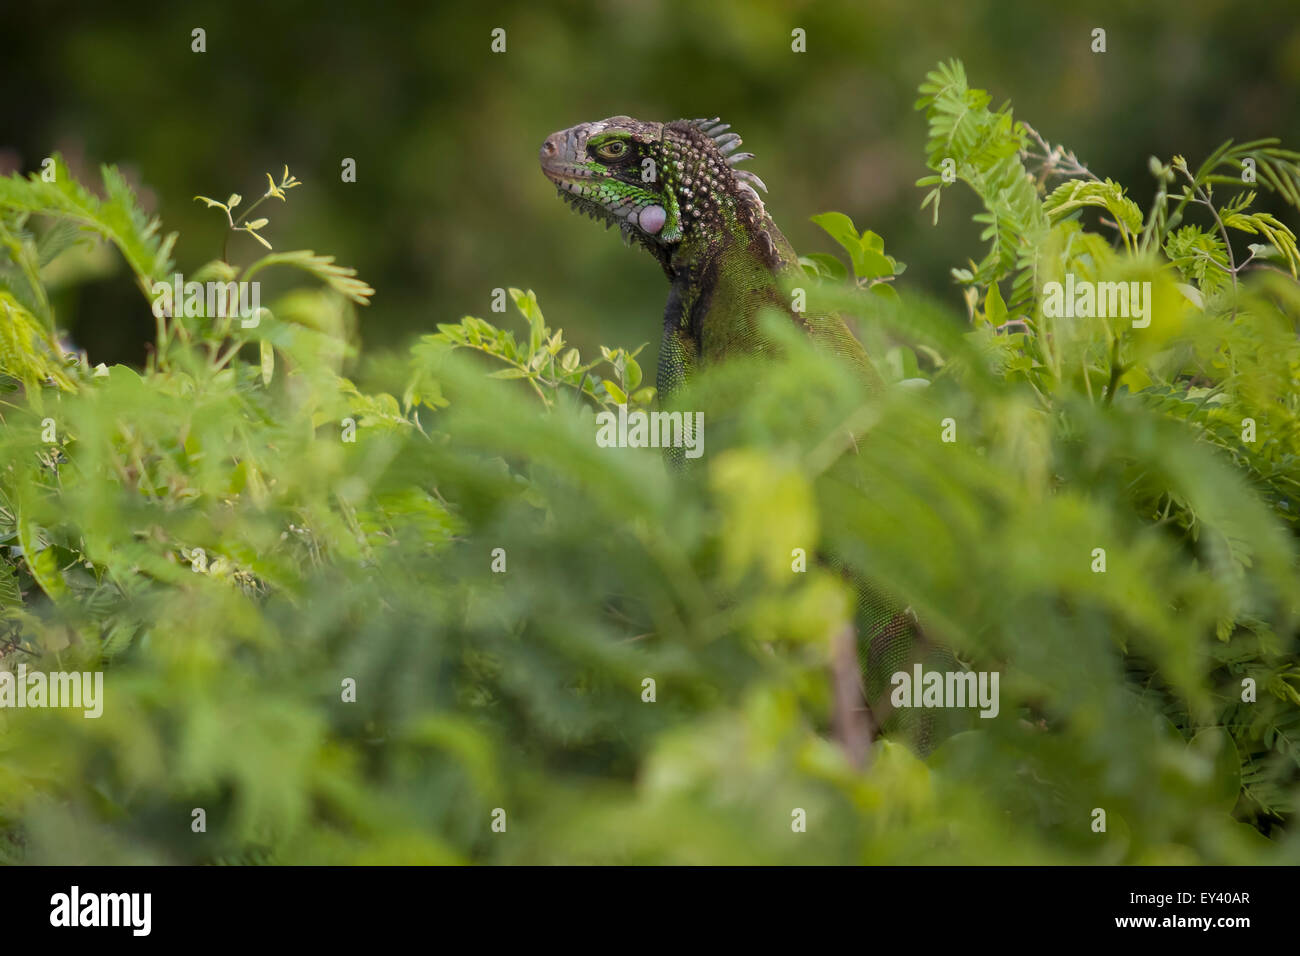 Green Iguana hidden in lush foliage. Stock Photo